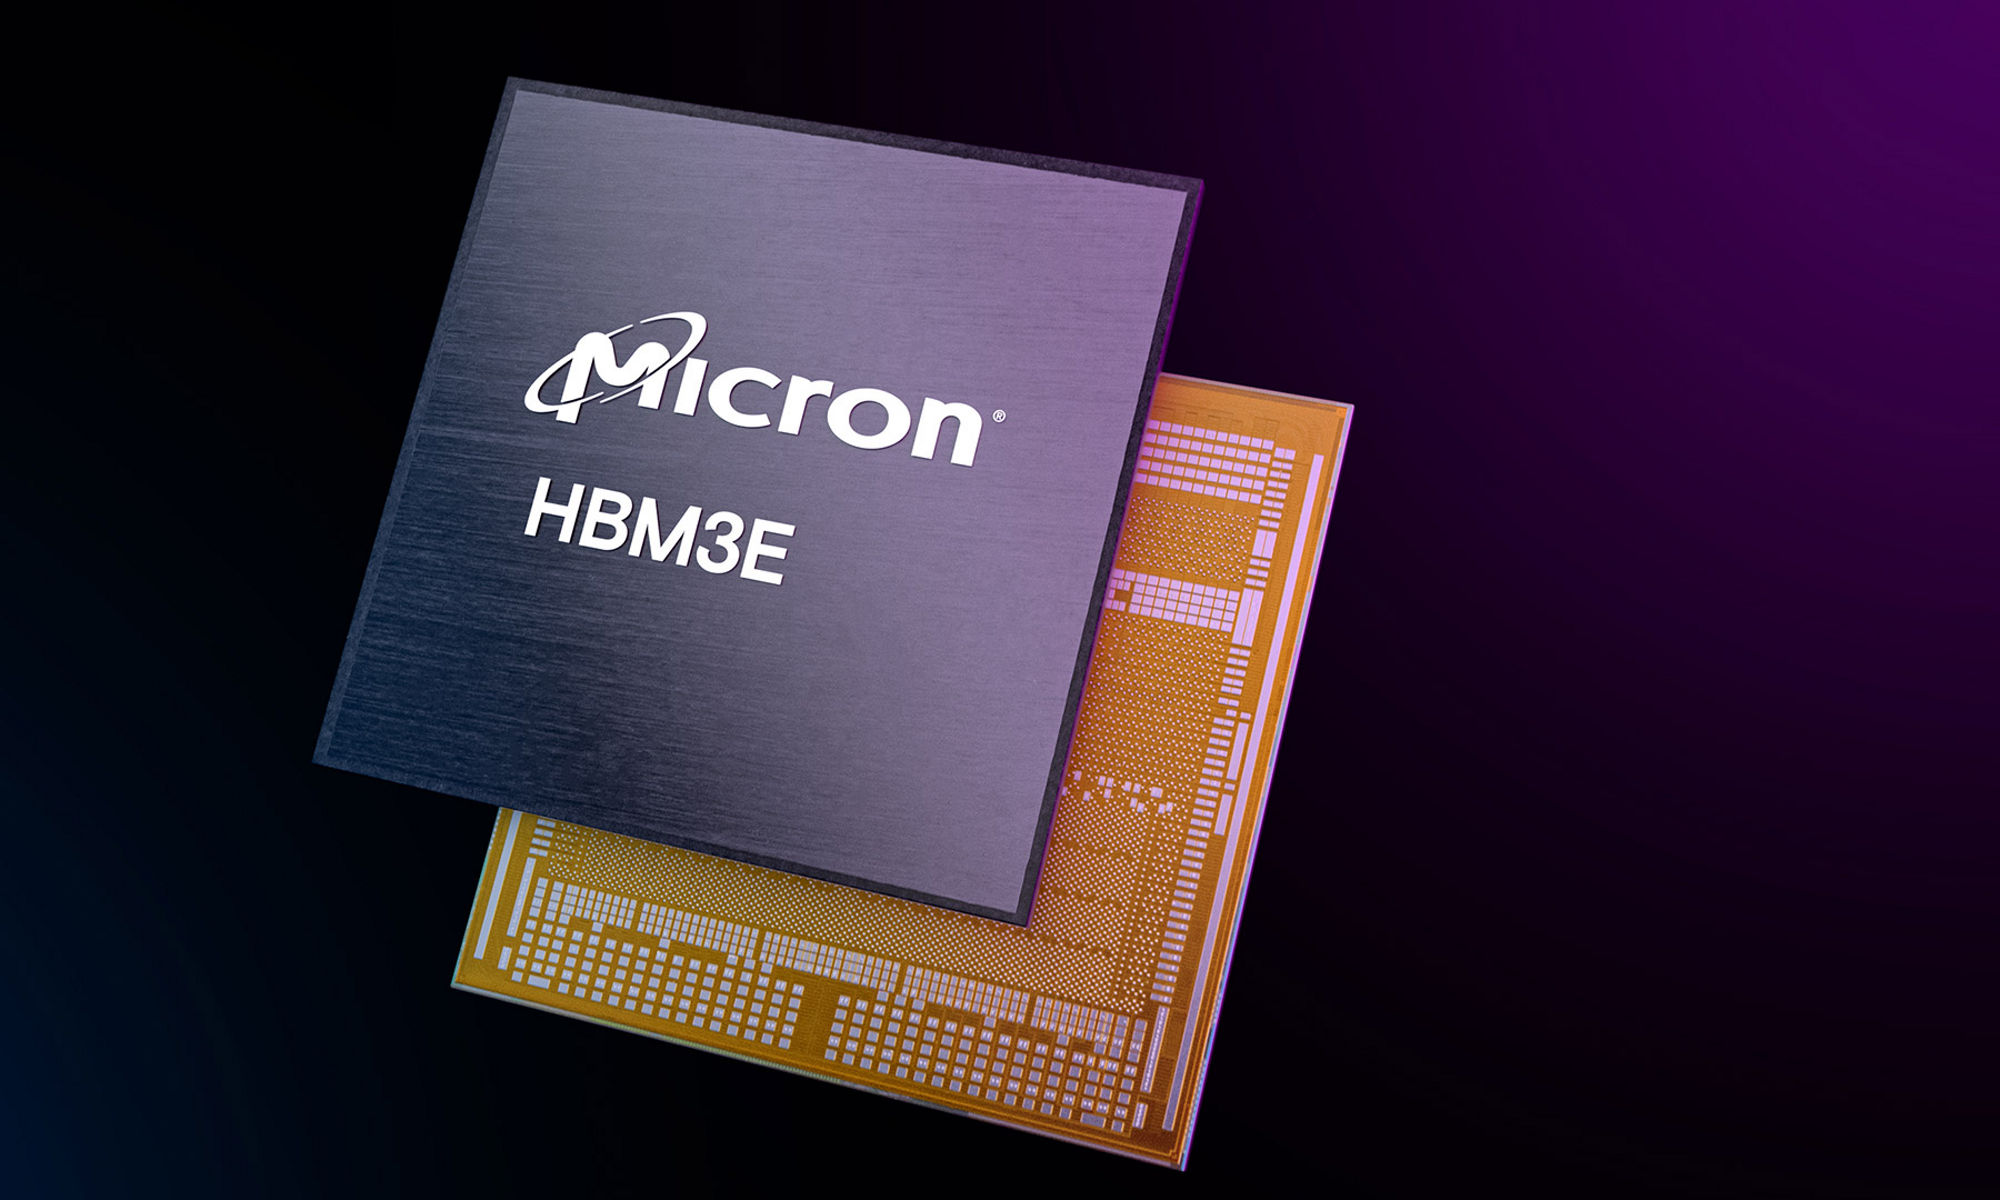 Product shot of Micron HBM3E product